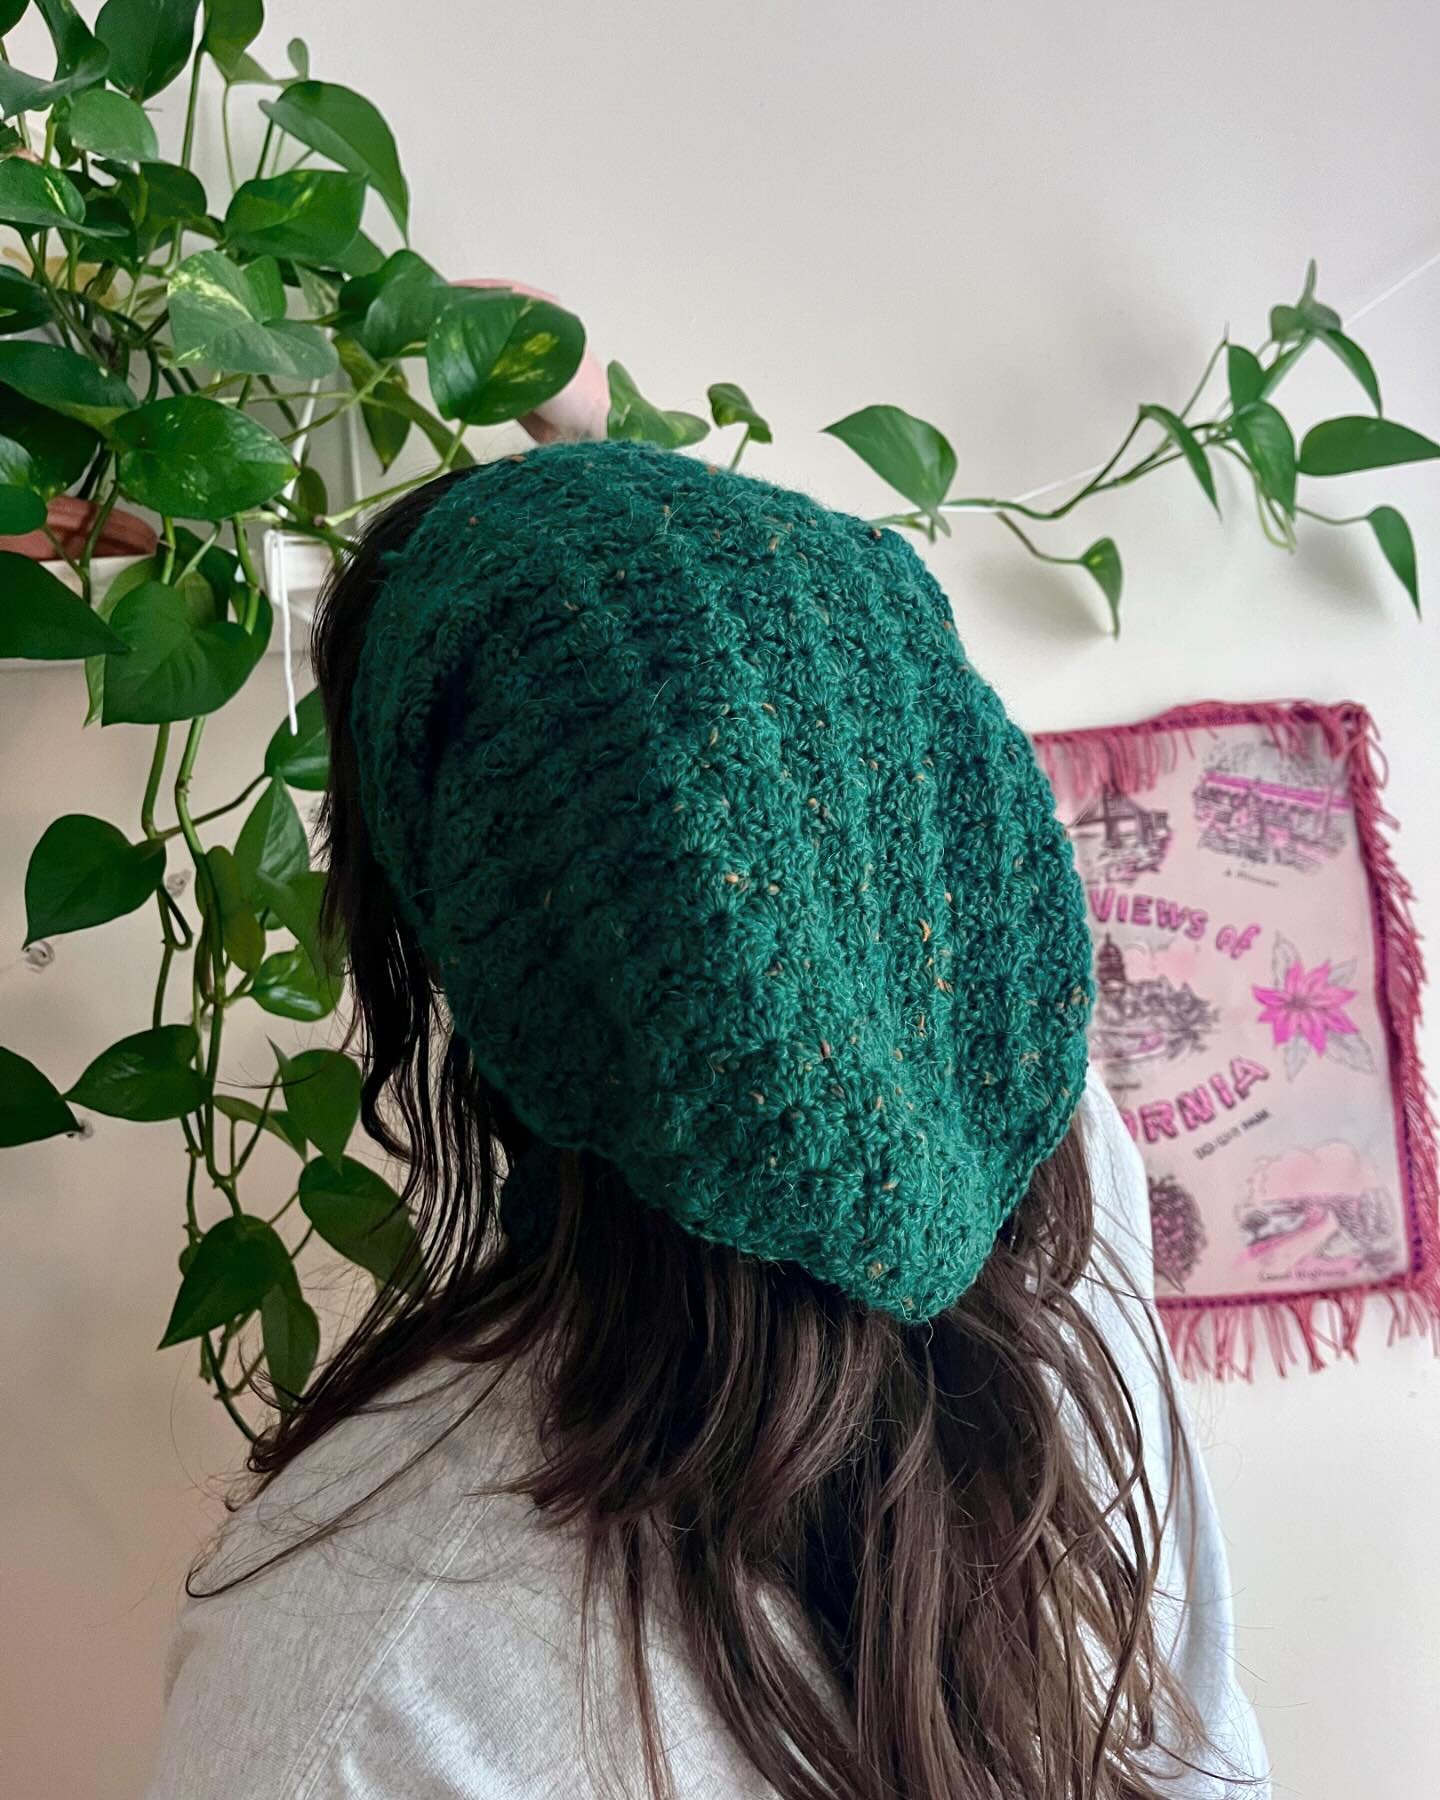 Throwing it back to my beautiful Lucia Scarf 💚 It&rsquo;s getting to be primetime headscarf season! 
-
#crochet #cosmaudipattern #luciascarf #crochetbandana #crochetscarf #springcrochet